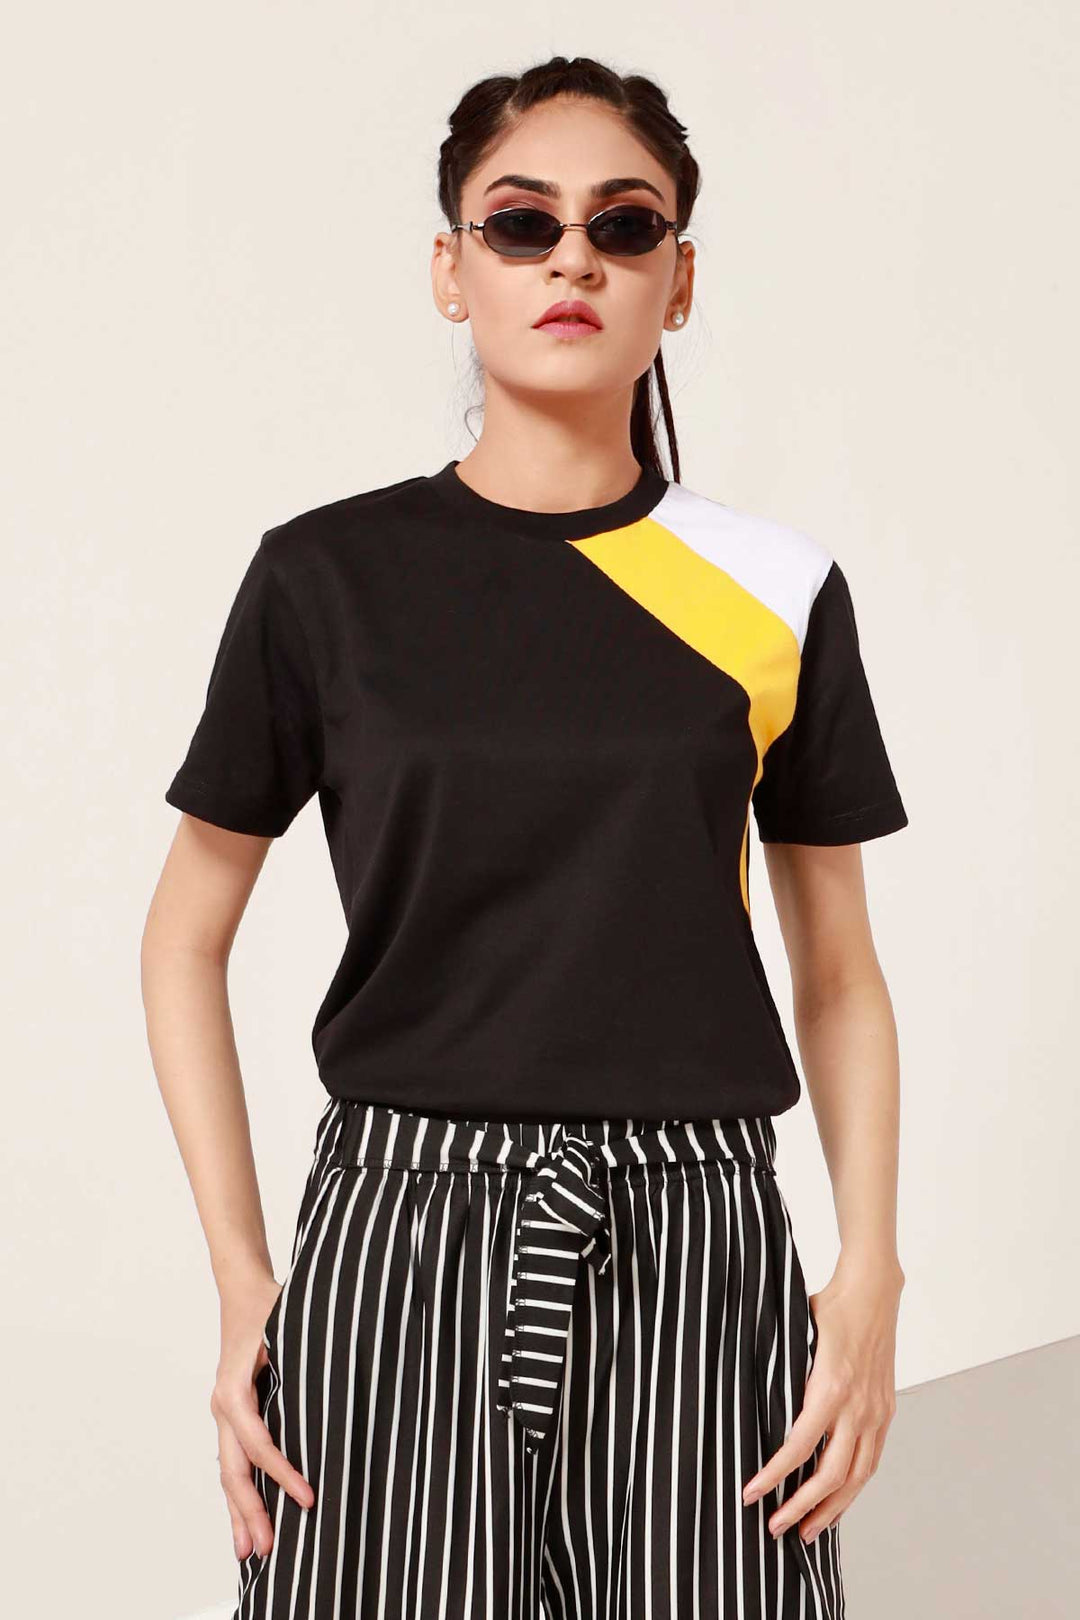 Futuristic Yellow Striped T-Shirt (Plus Size) - P21 - MT0087P